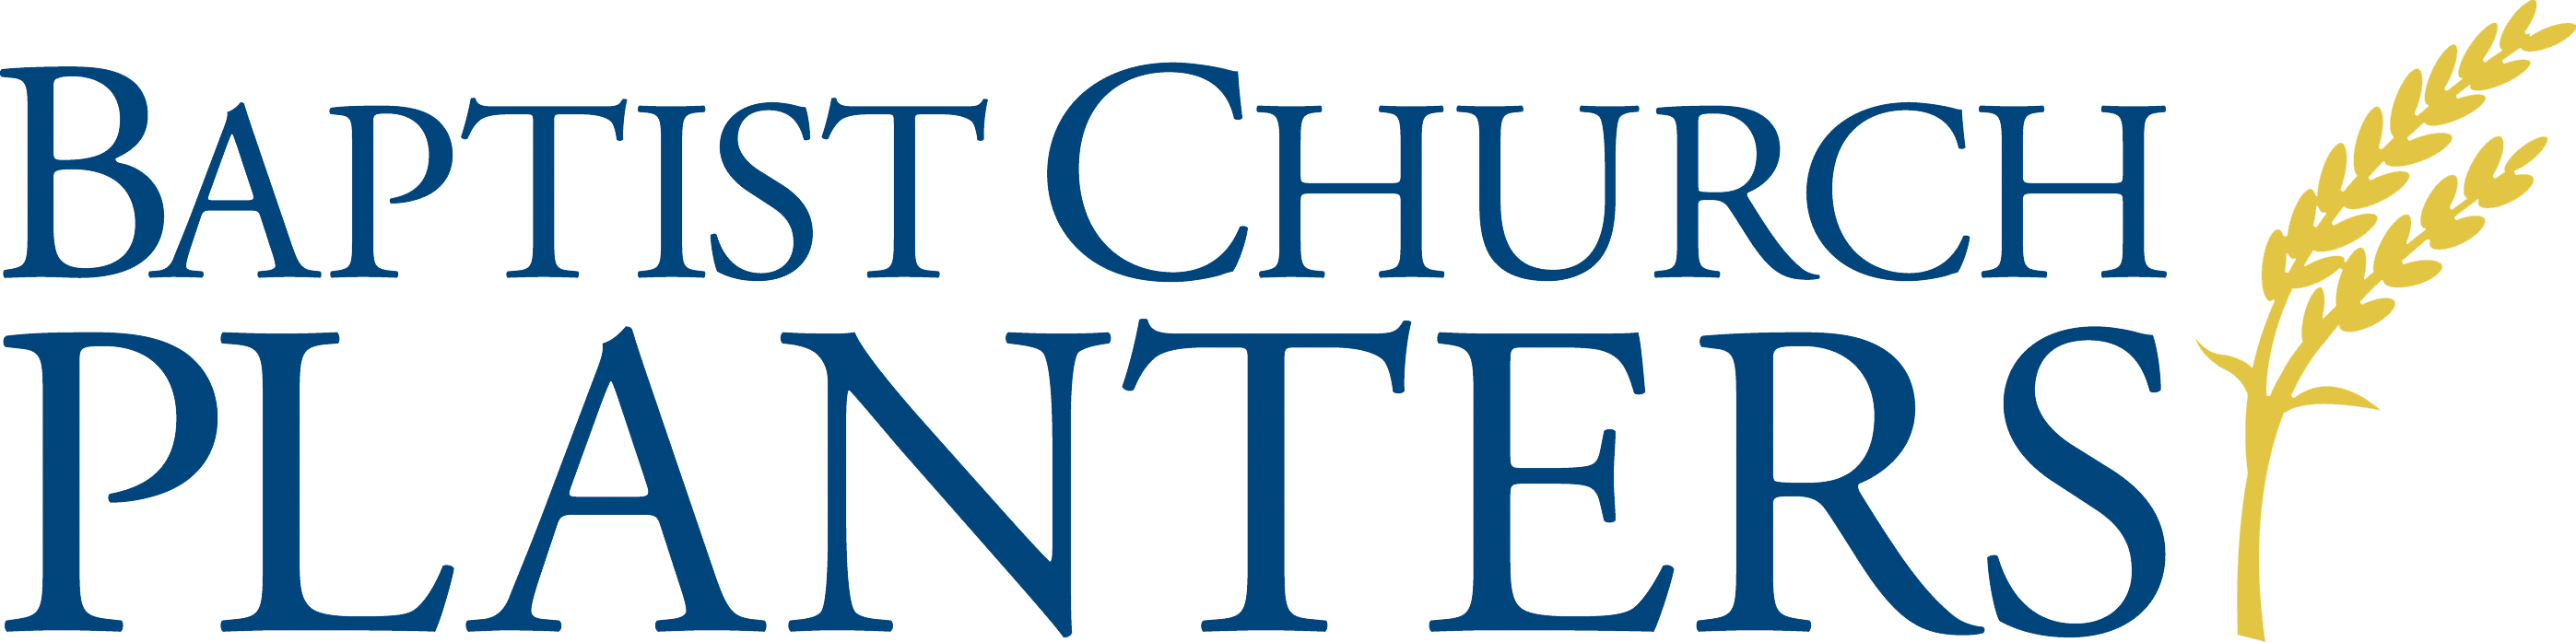 Baptist Church Planters Logo